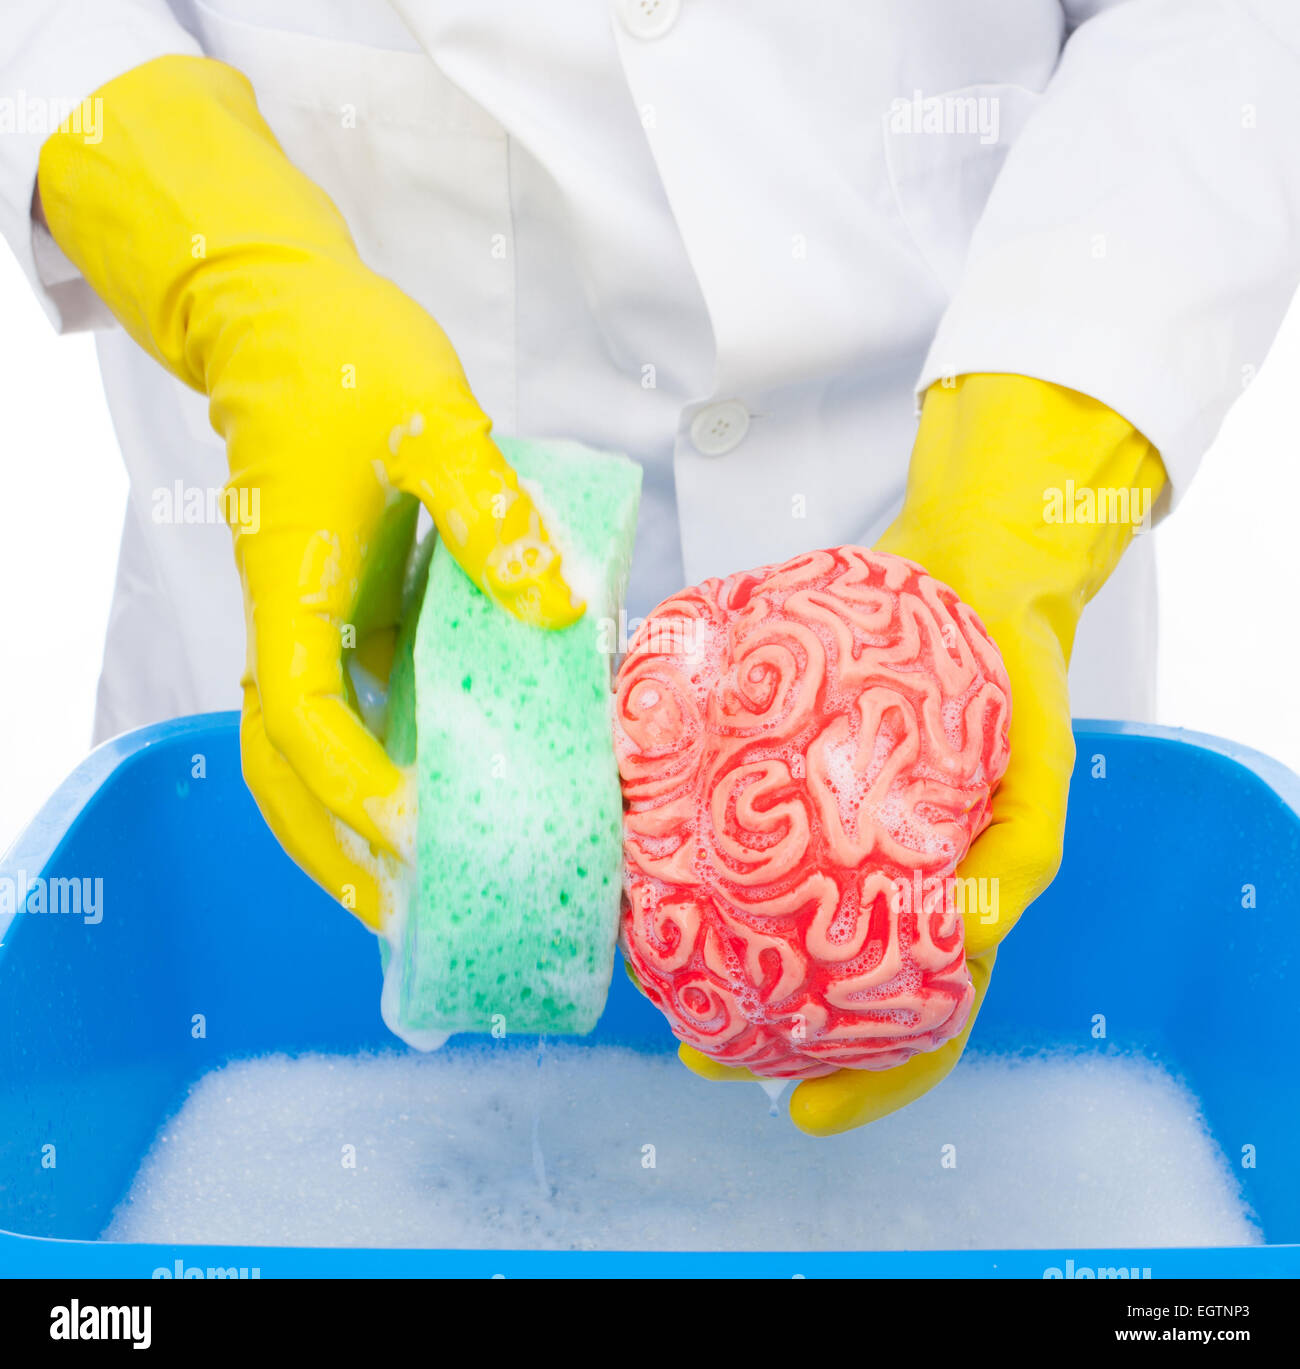 Metaphor of brainwashing, doctor washes the brain with the sponge. Stock Photo